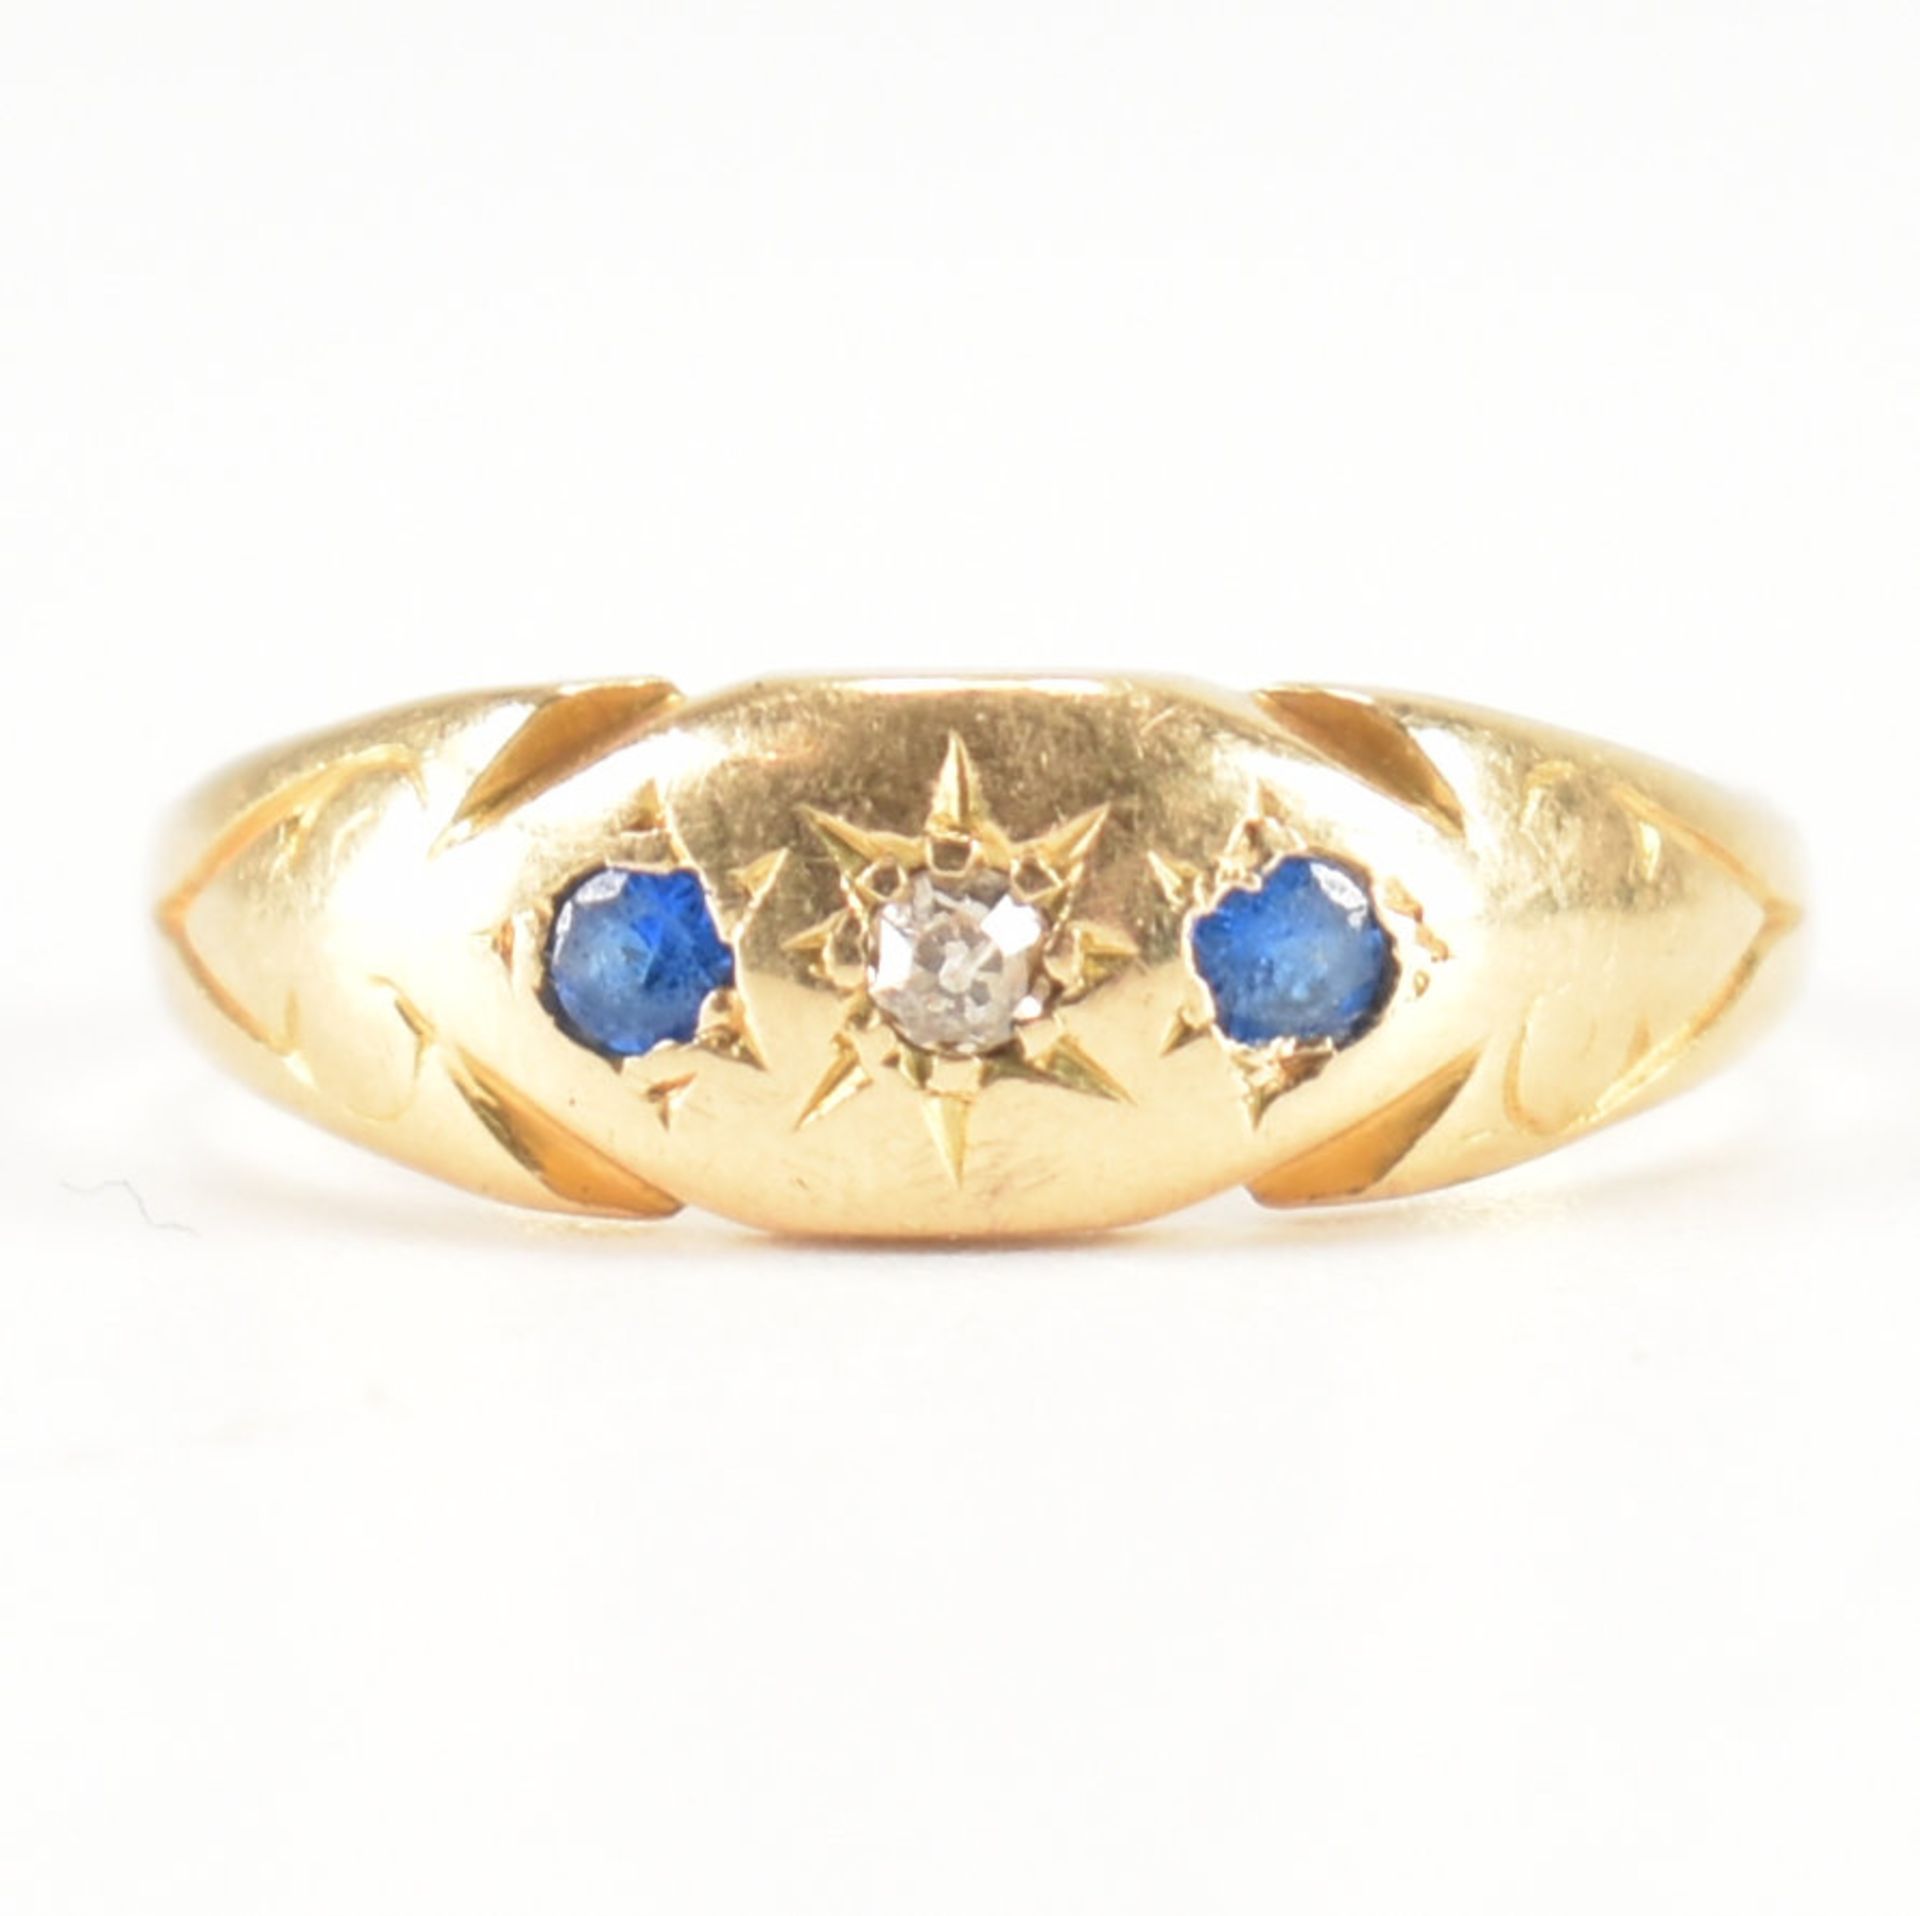 HALLMARKED 18CT GOLD DIAMOND & BLUE STONE RING - Image 2 of 9